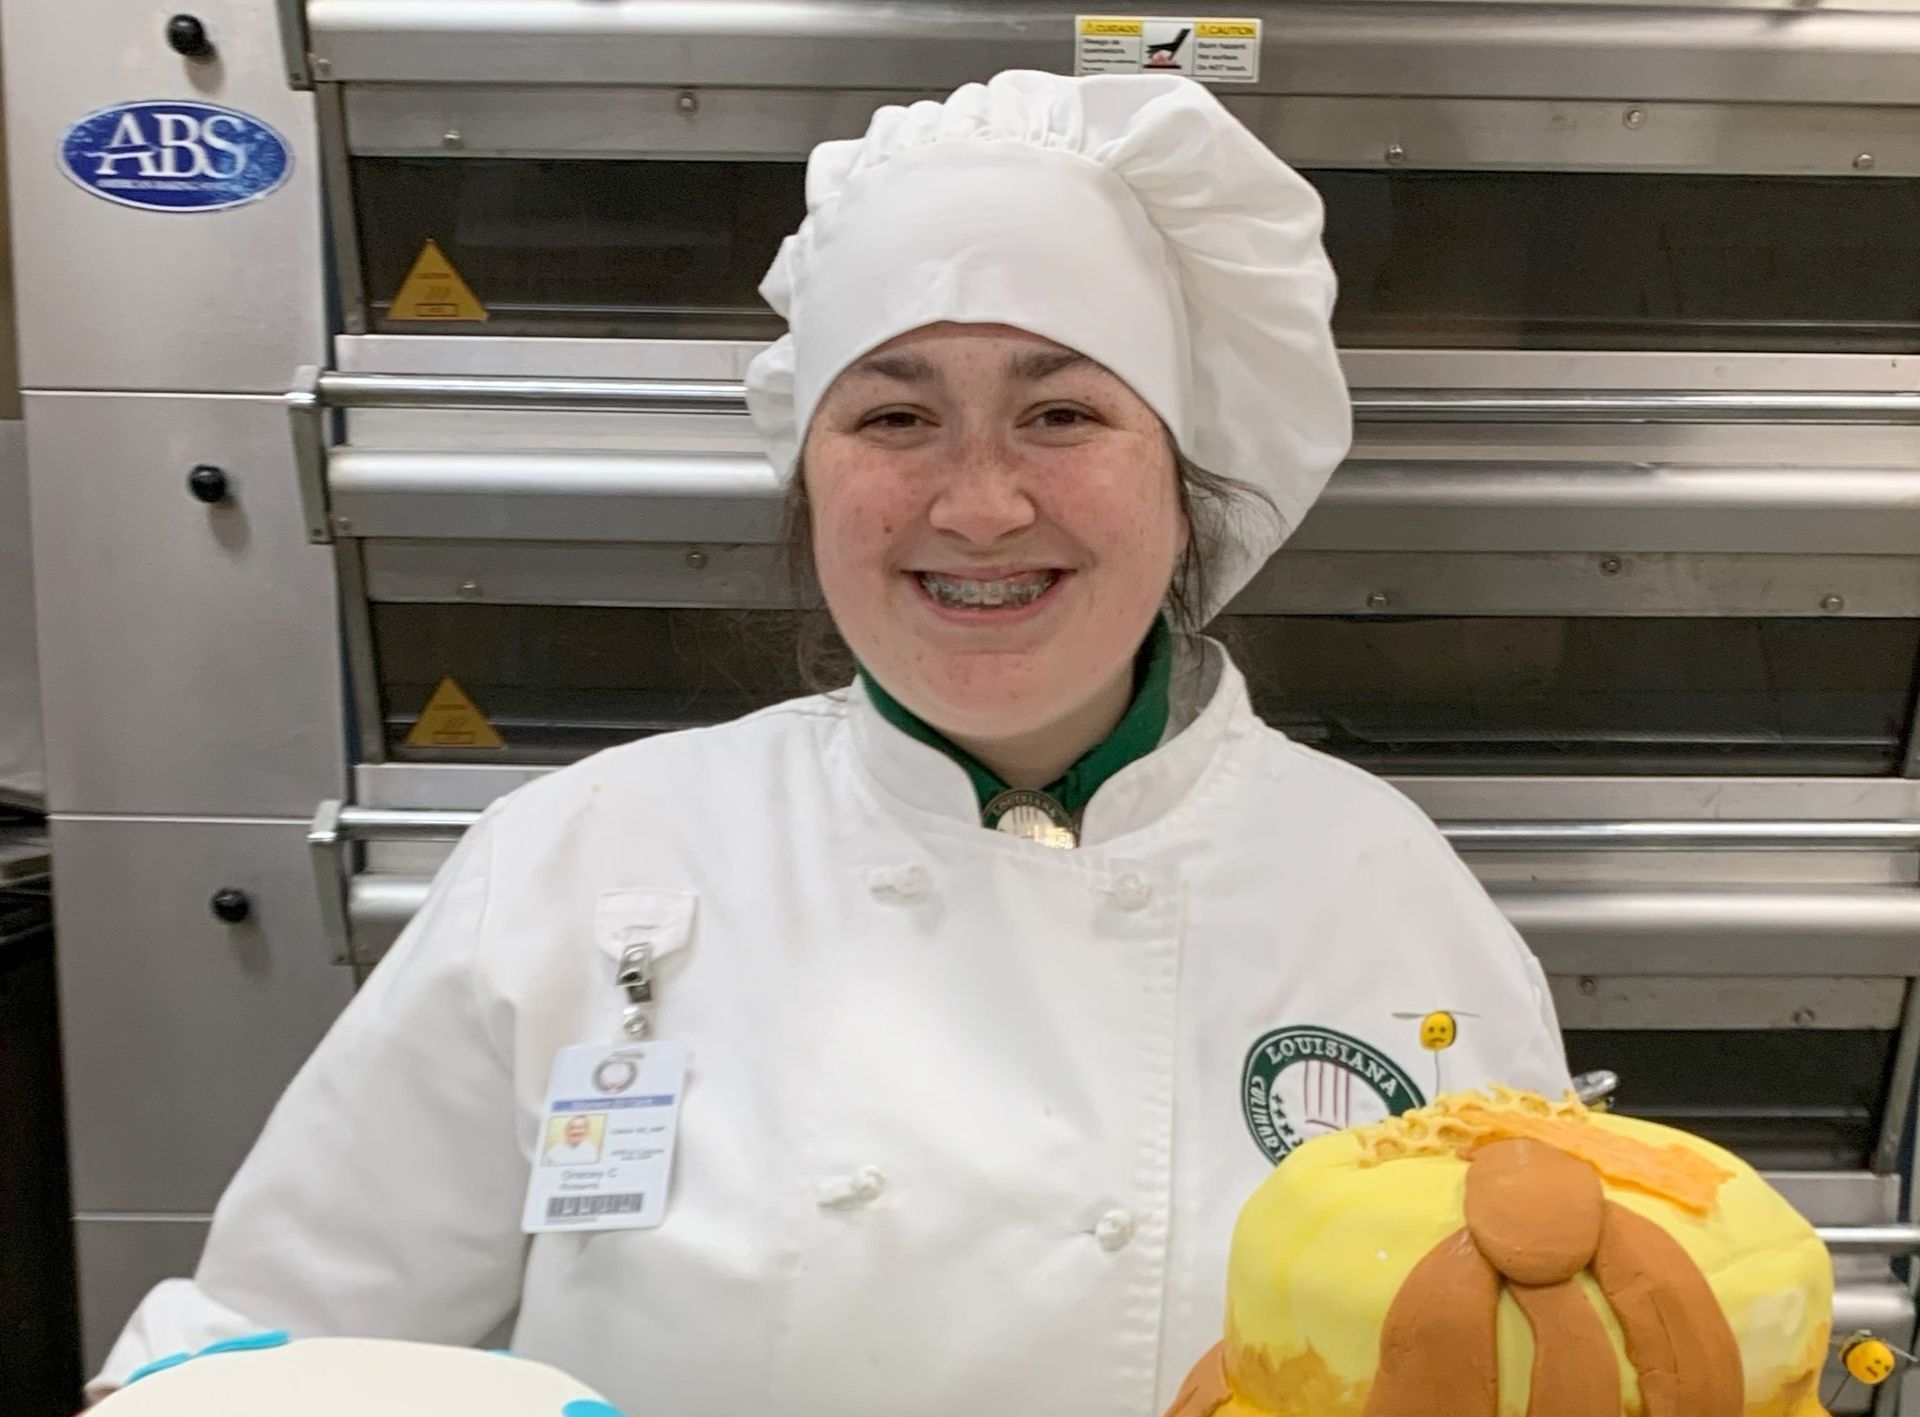 Becoming a Professional Baker: Meet LCI Student Gracey Roberts